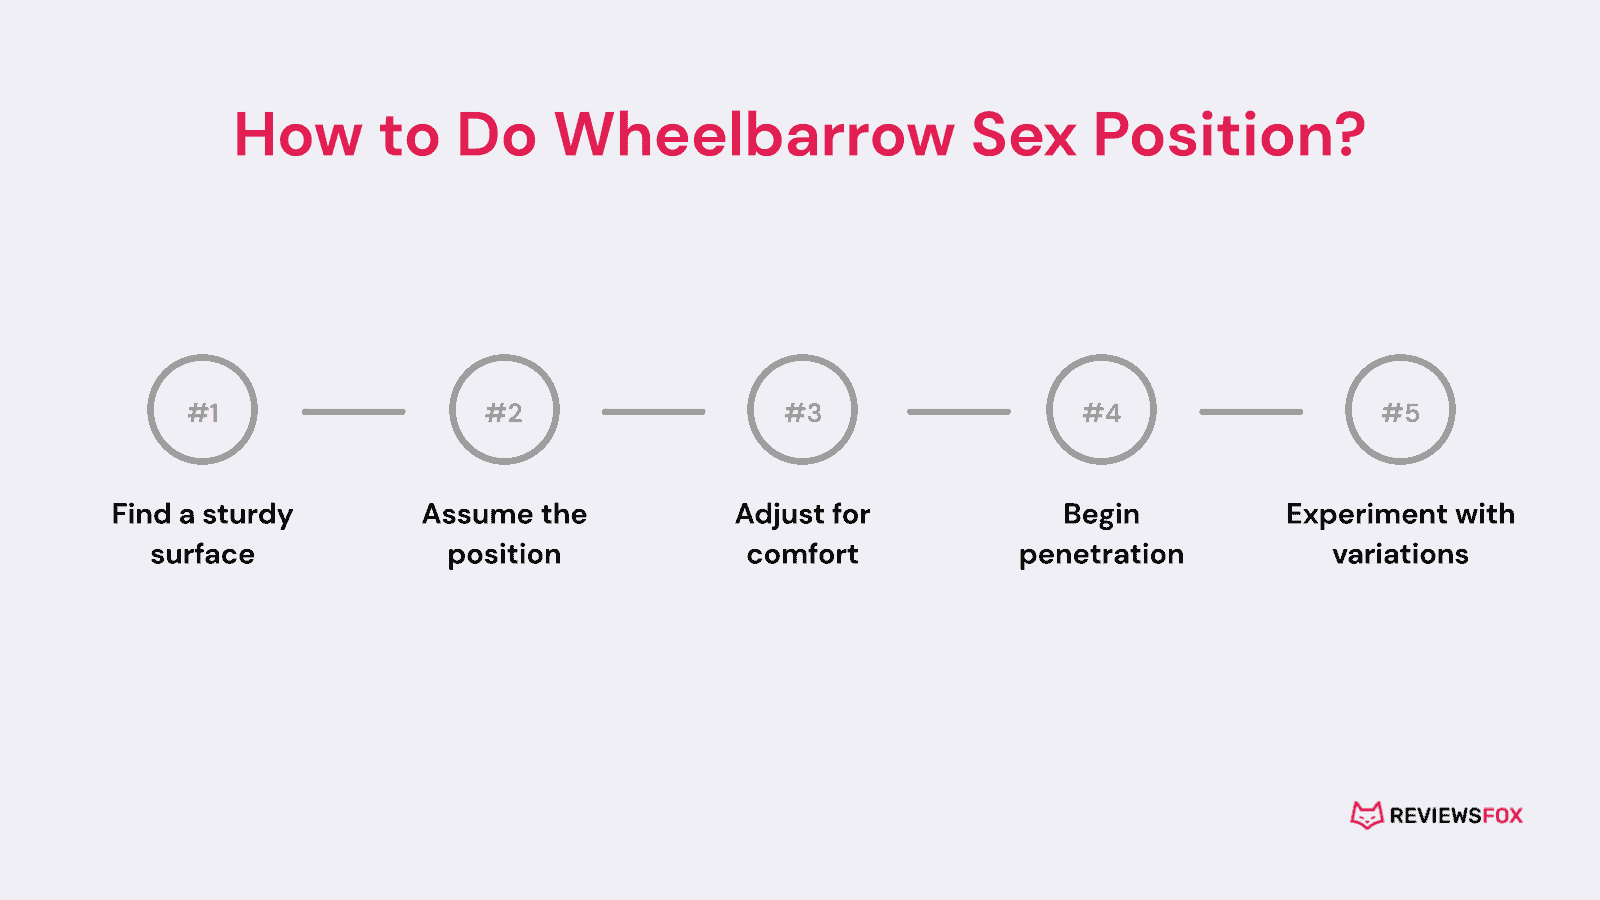 How to do Wheelbarrow sex position